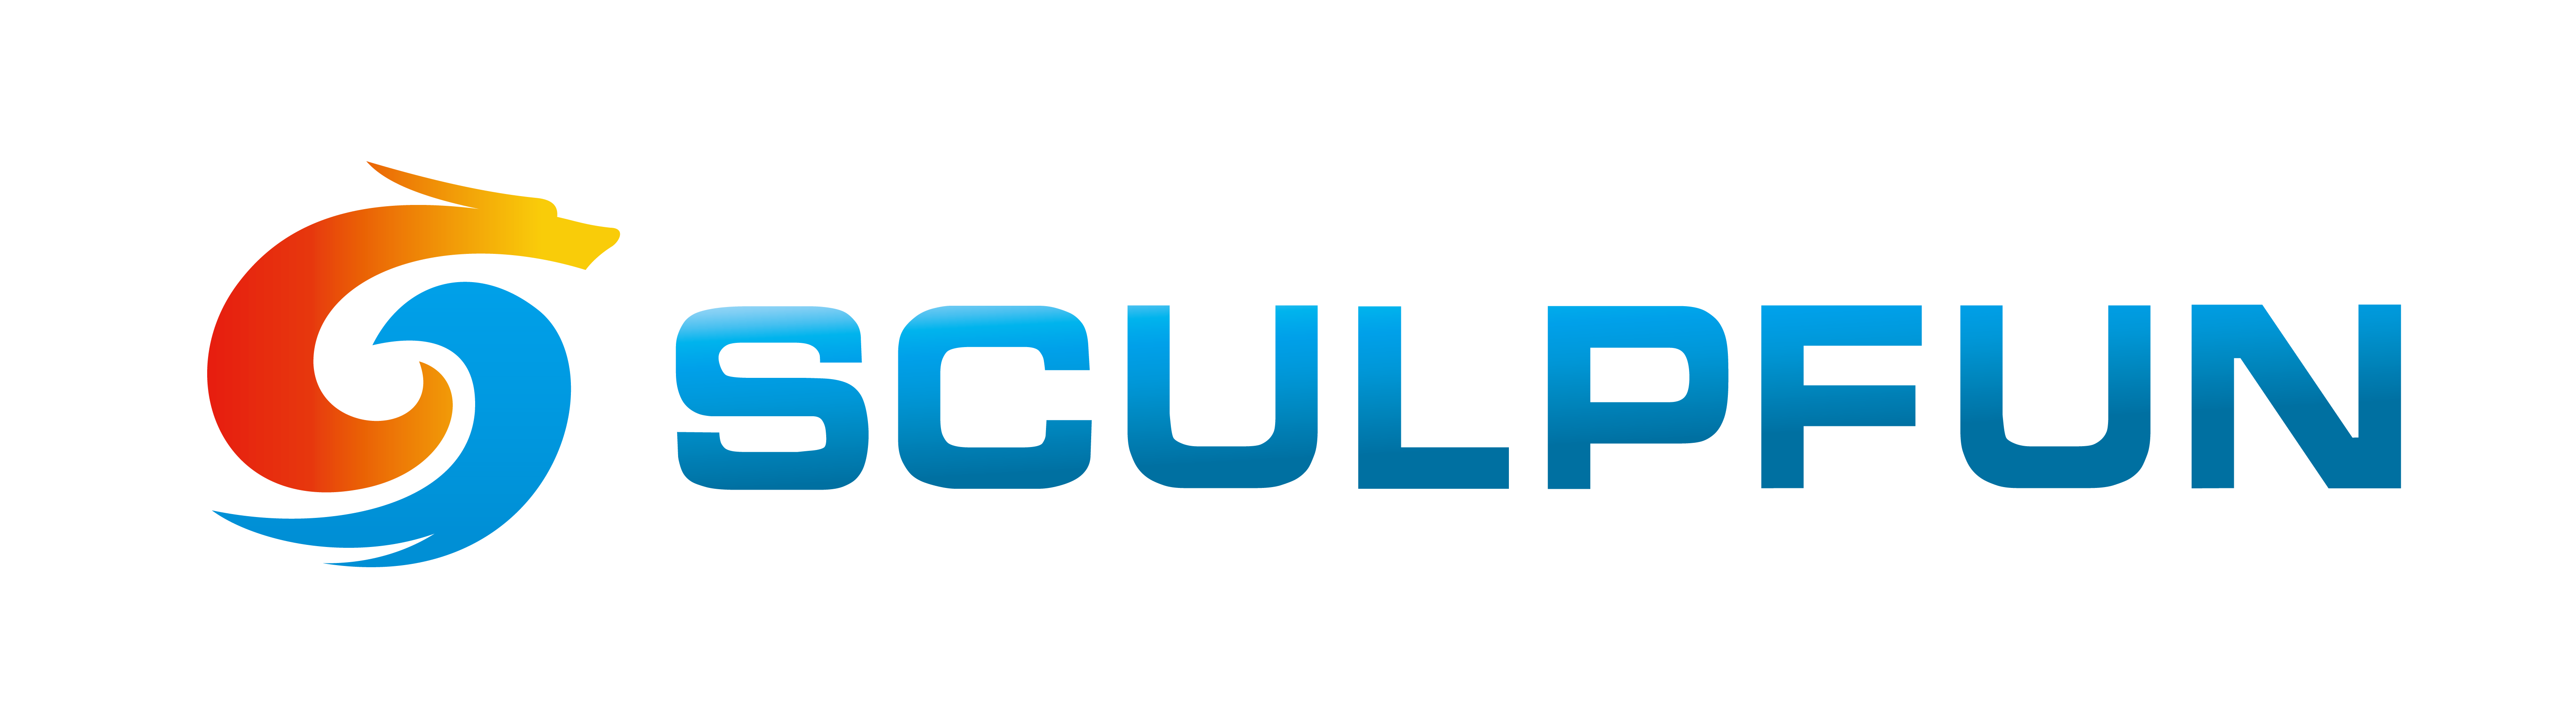 Sculpfun logo